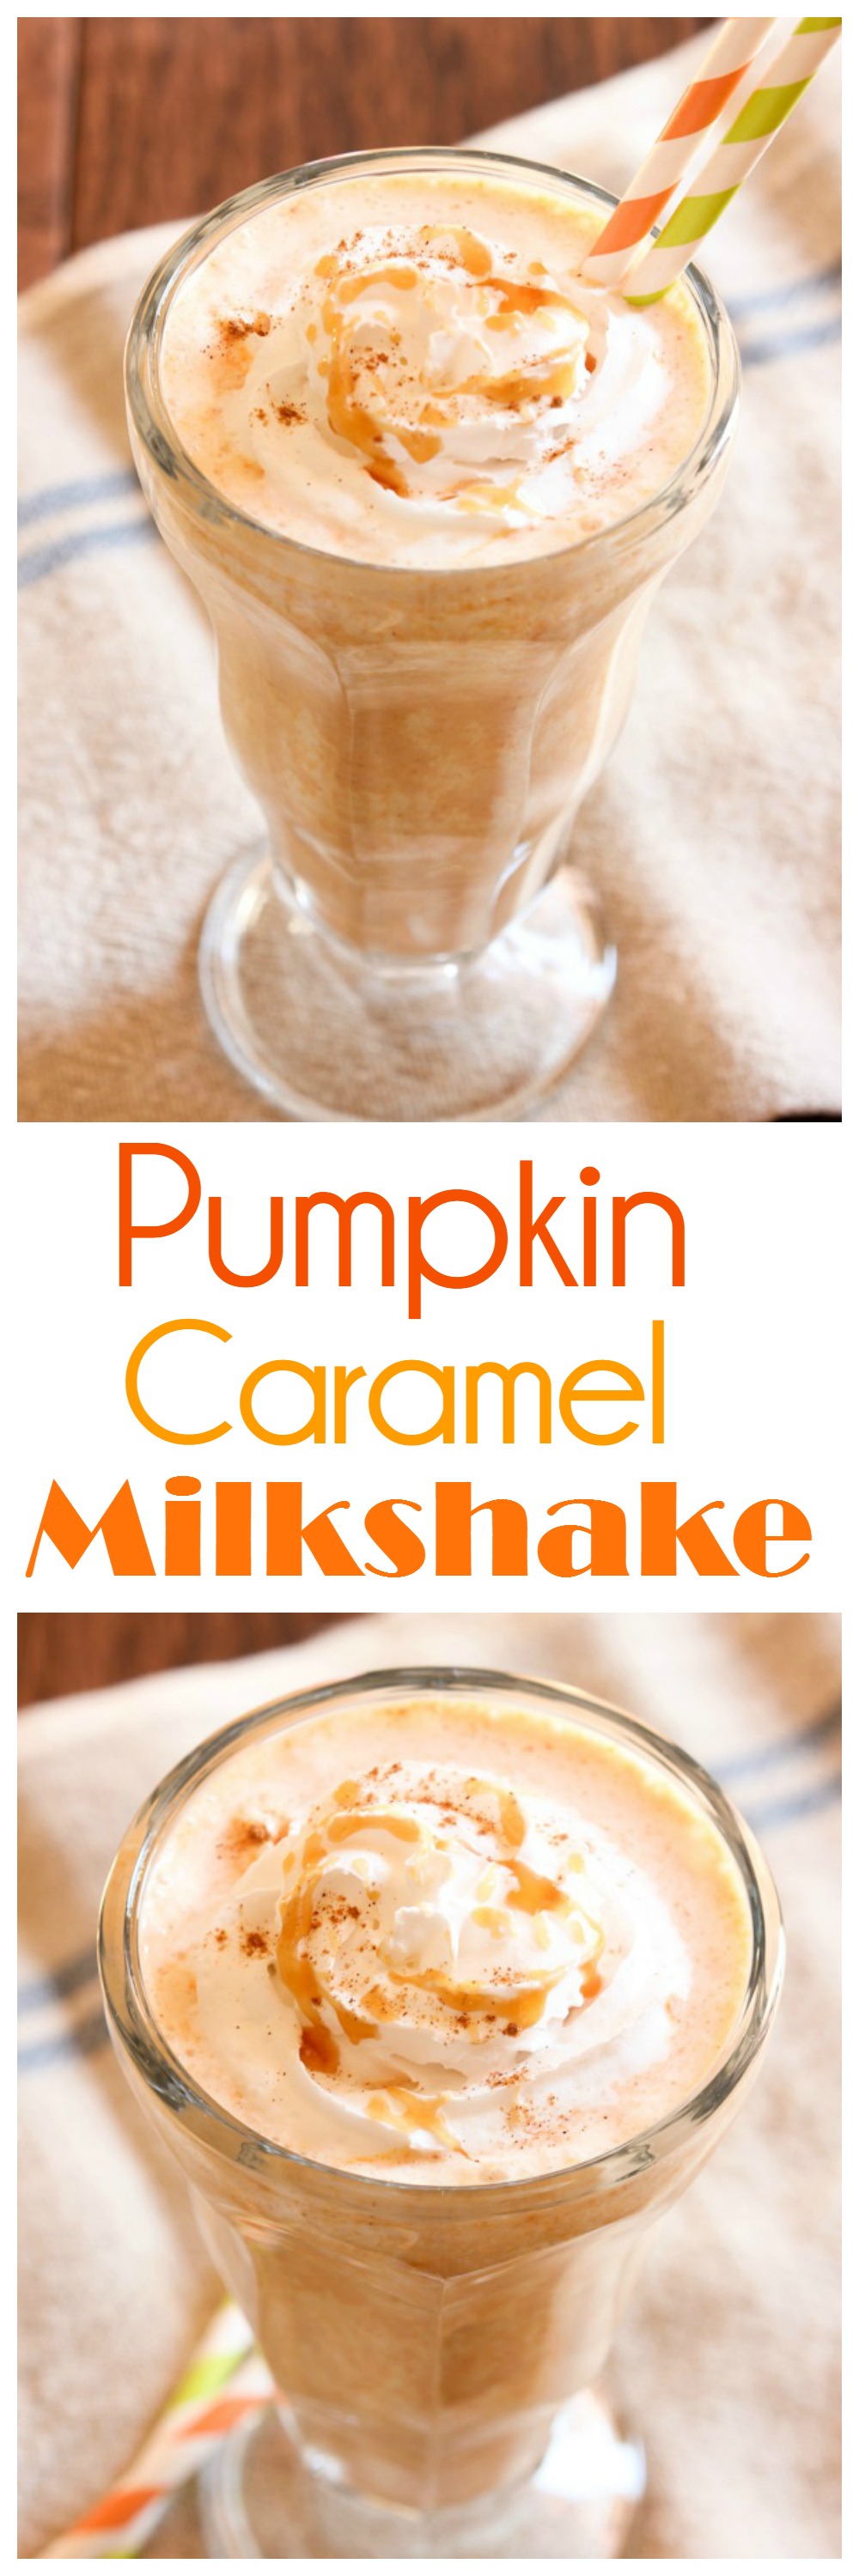 Pumpkin Caramel Milkshake